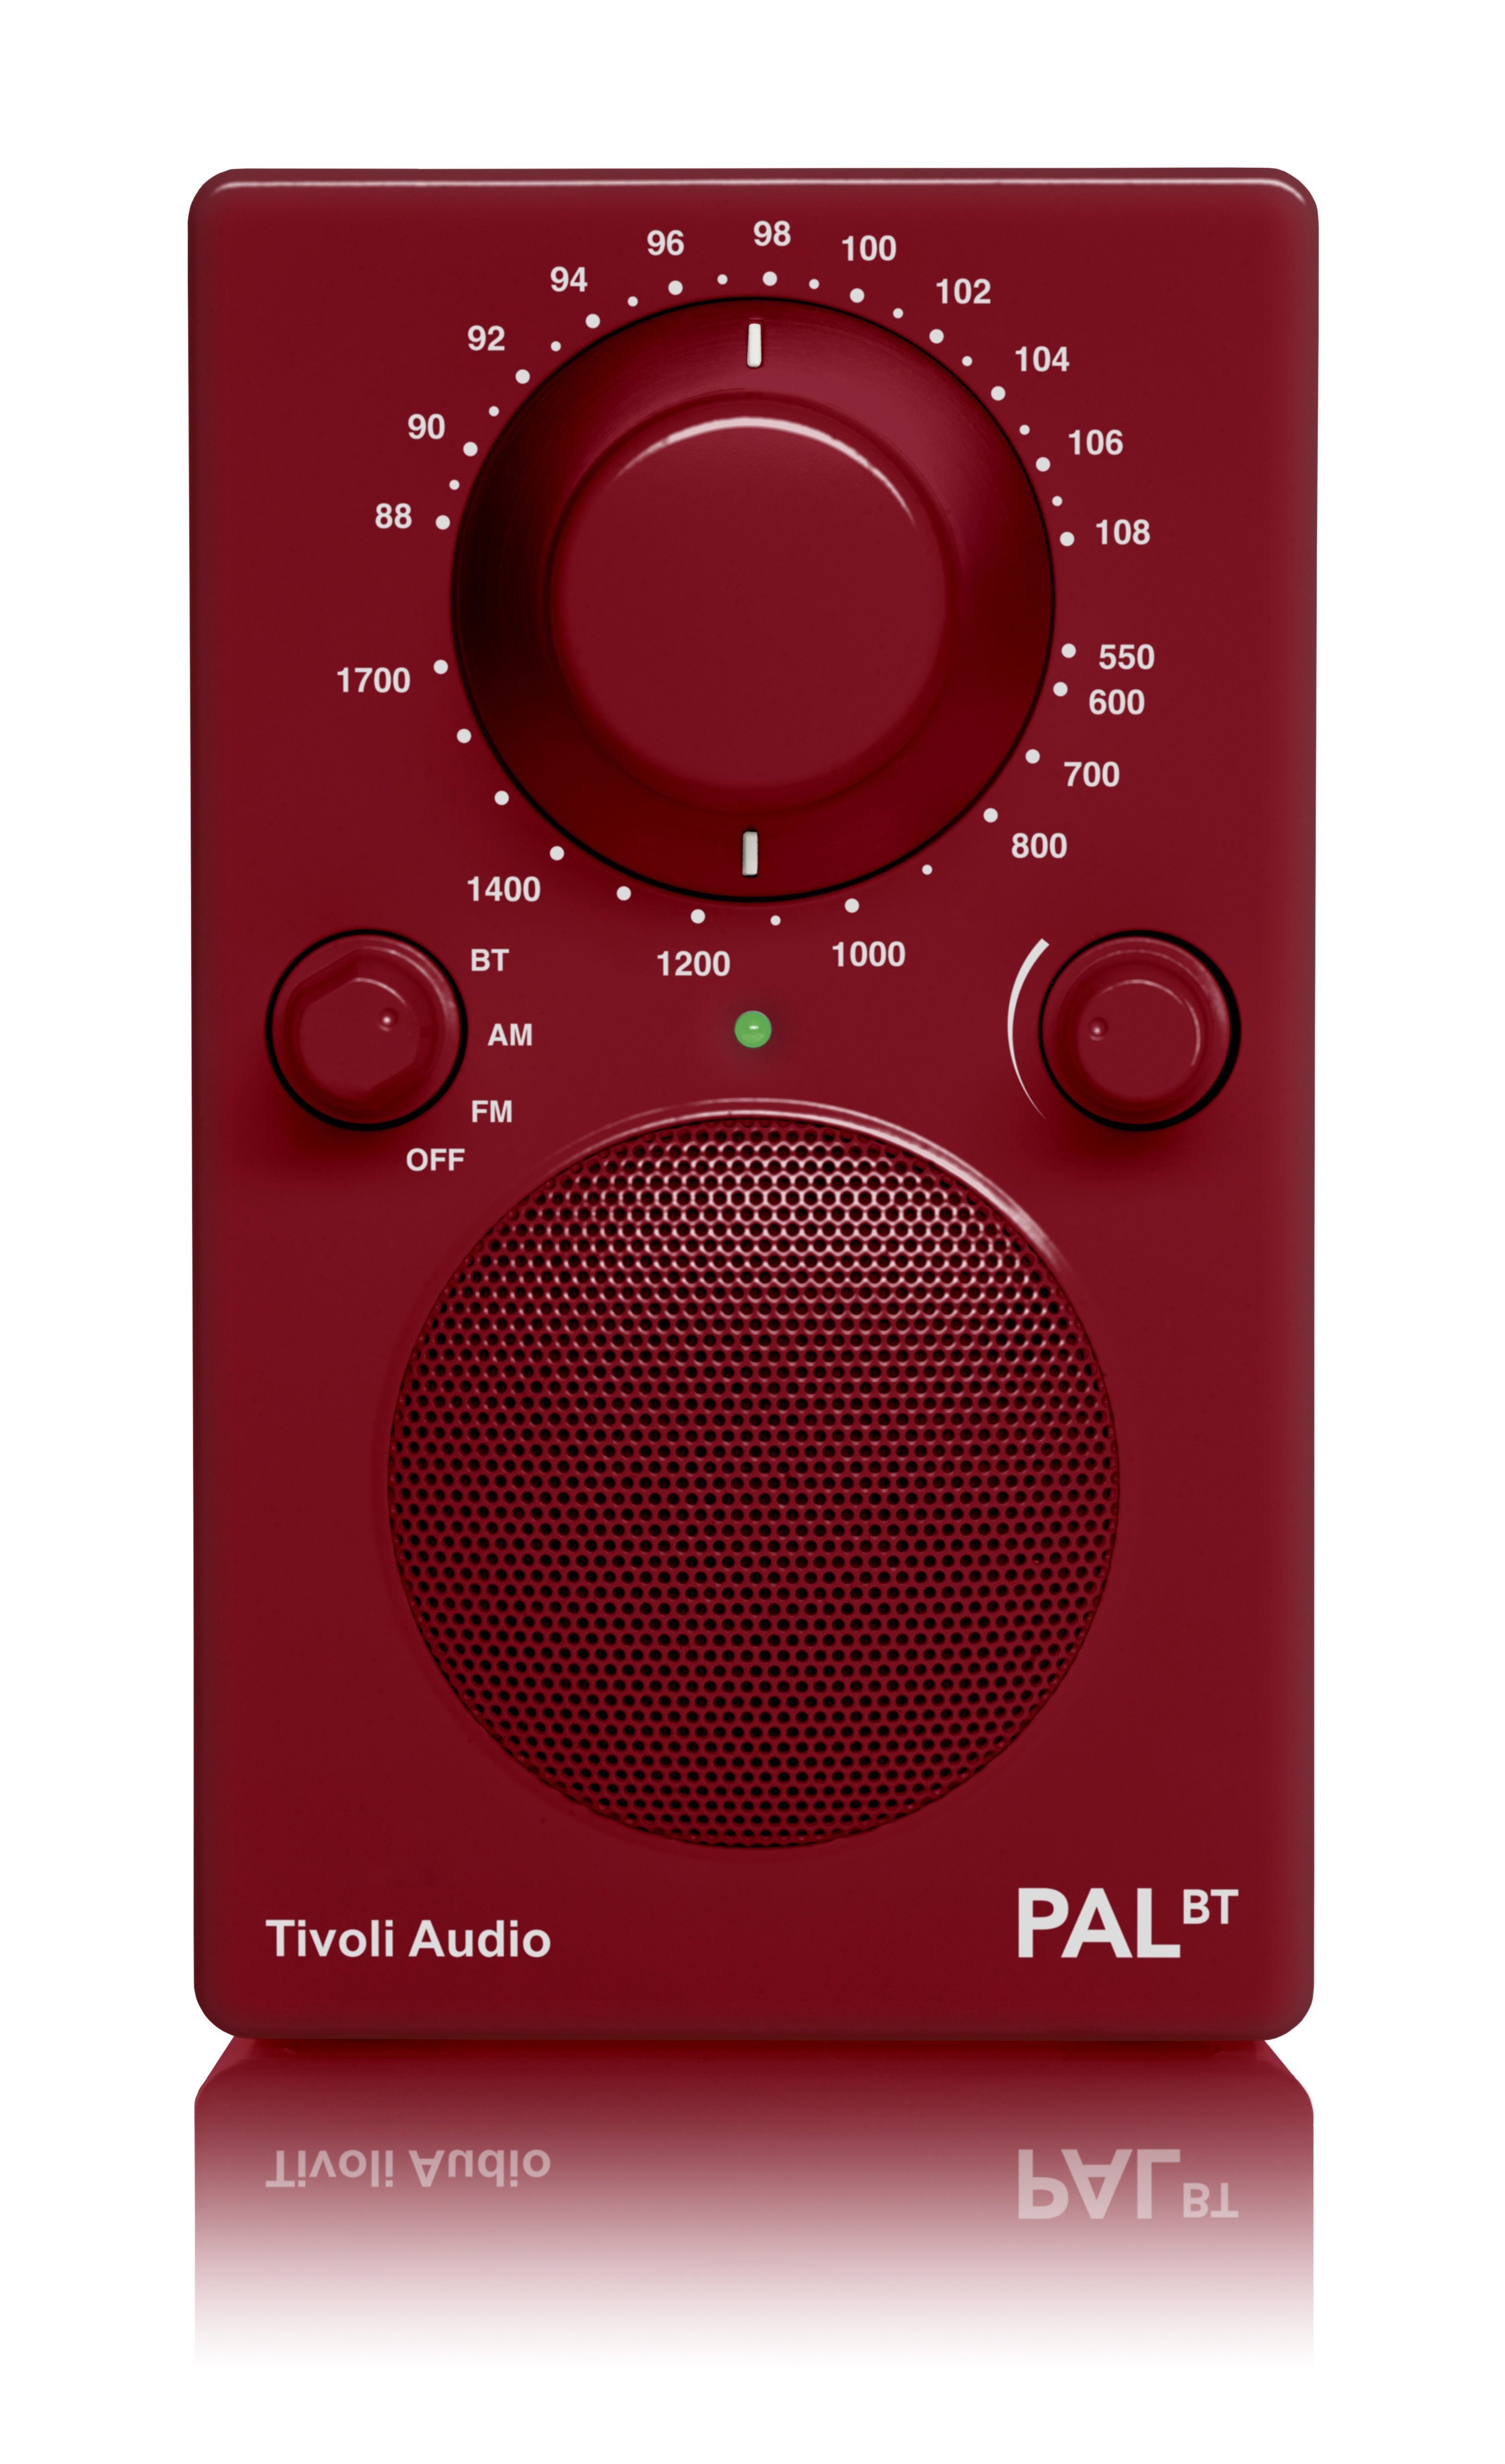 BT tragbar, (FM-Tuner, Akku-Betrieb) Bluetooth-Lautsprecher, Tivoli Audio Tisch-Radio, Rot Radio PAL